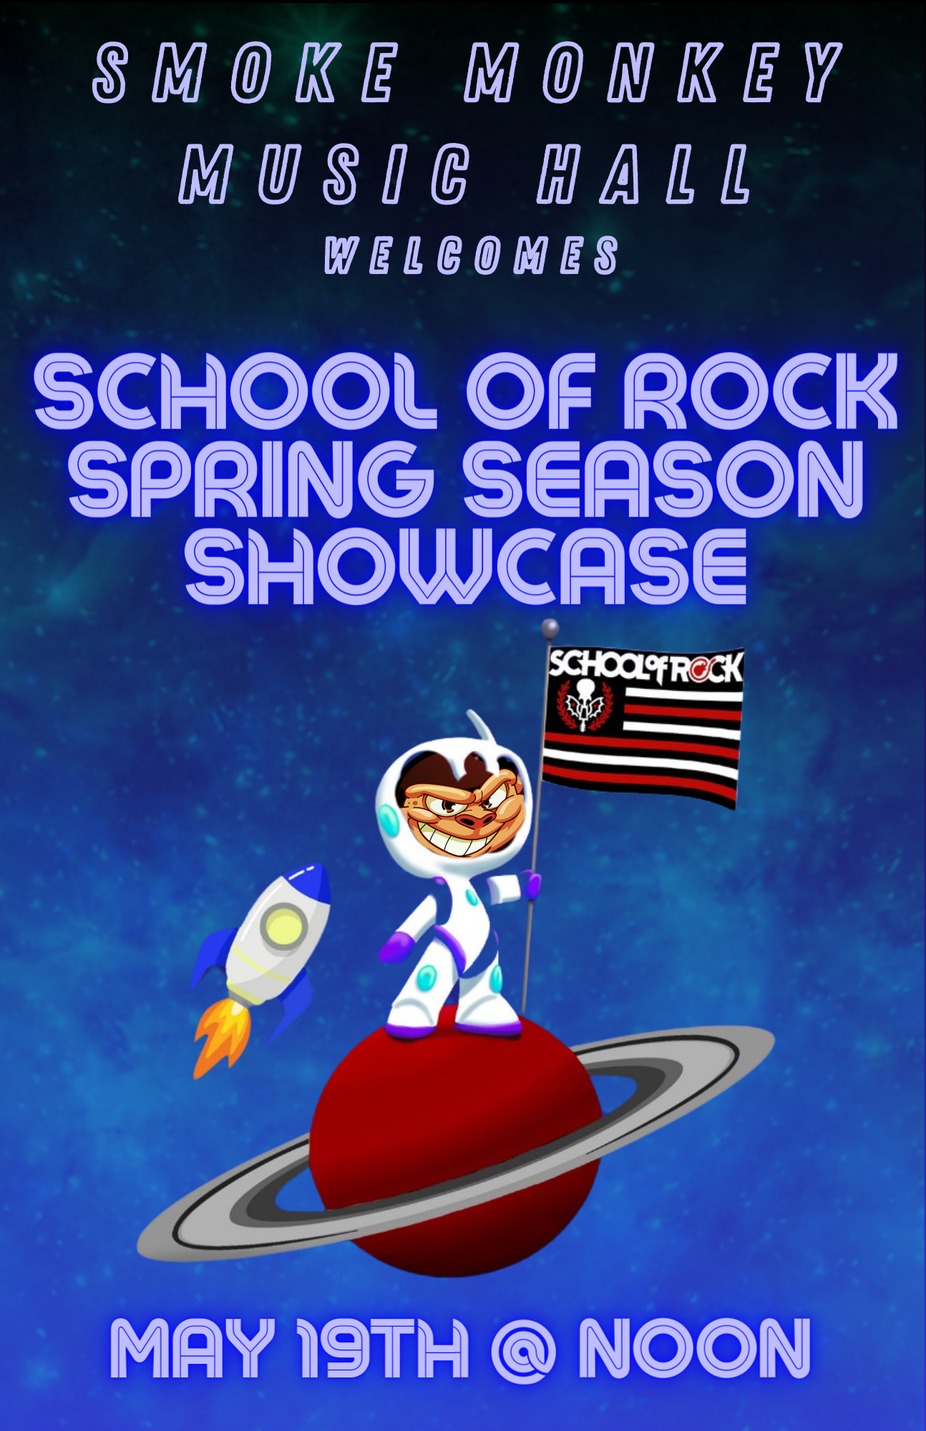 School of Rock Rockwall spring season showcase event photo